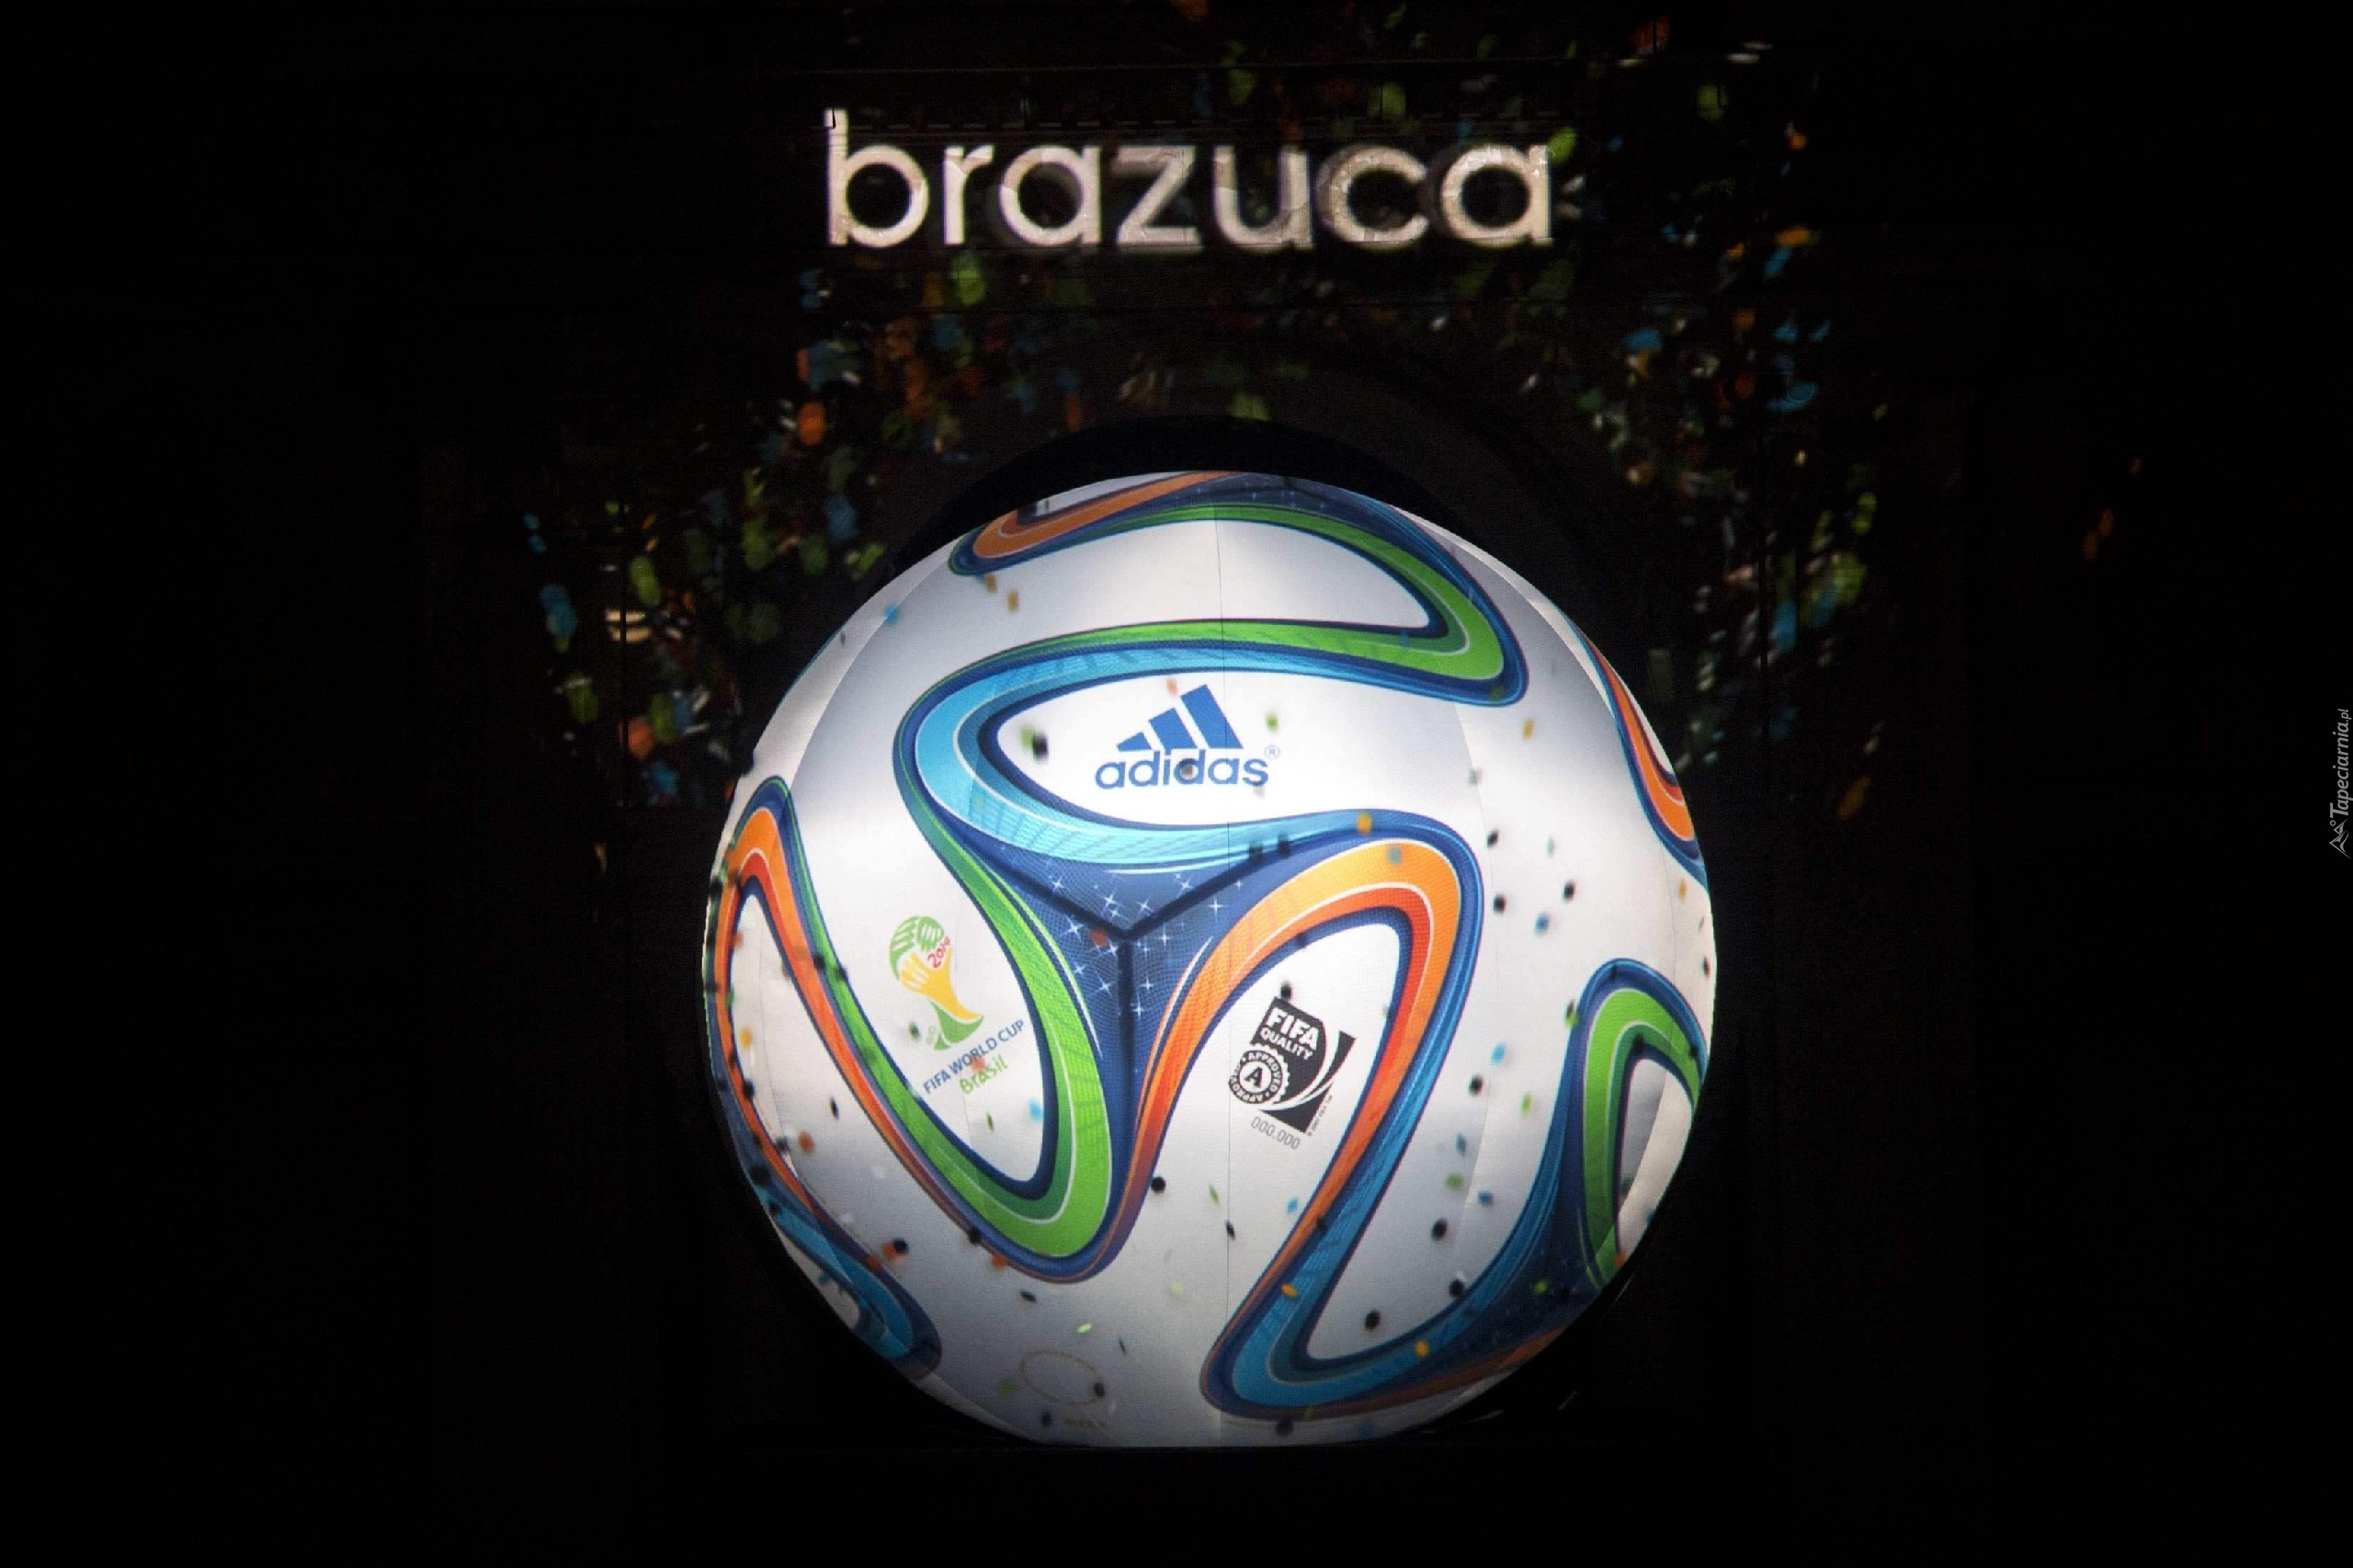 Oficjalna Piłka, Brazuca, Fifa World Cup 2014